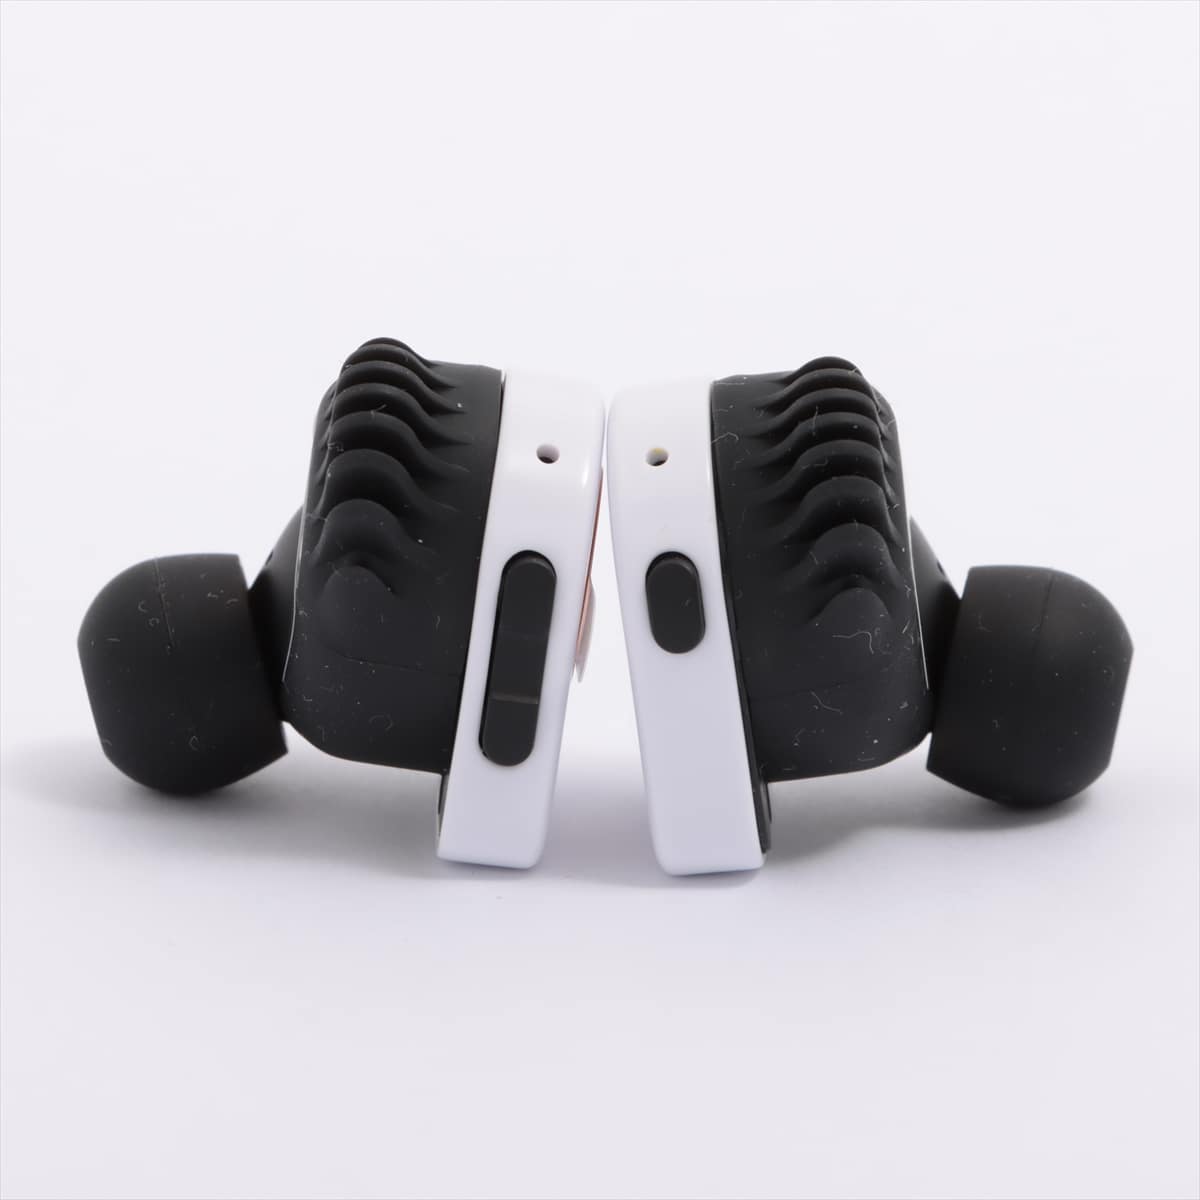 Louis Vuitton QAB120 Horizon UF04+8 Mobile Accessories Acetate White earpiece